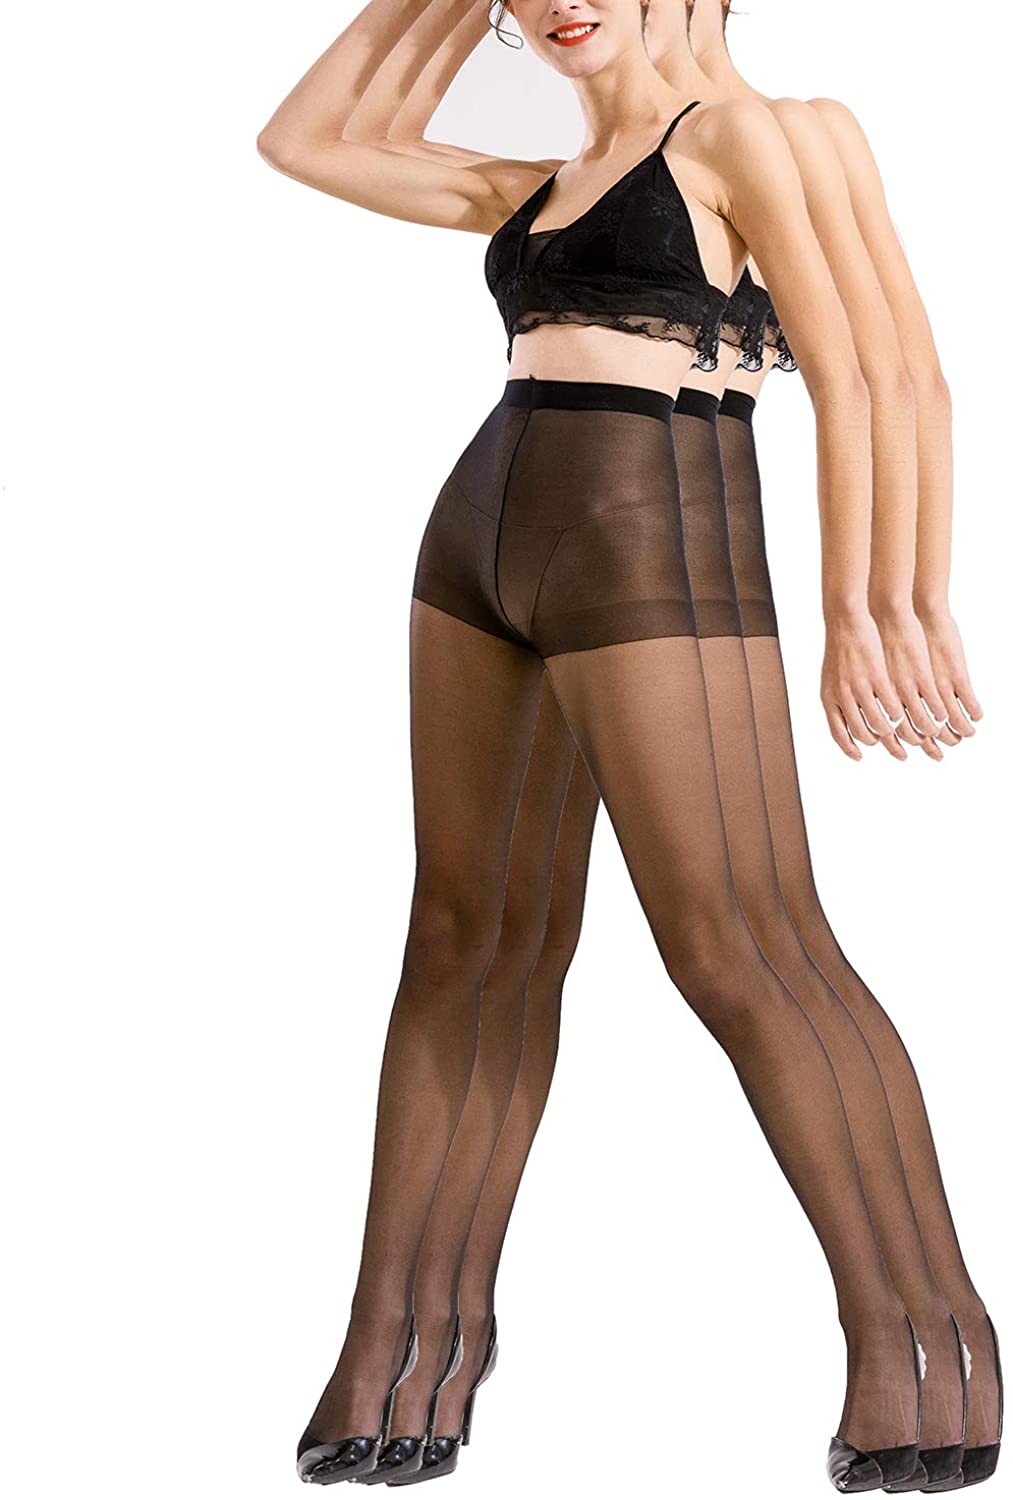 BONAS Pantyhose 3pairs Womens Silk Reflections Sheer Toe Silky Microfiber Oxygen Tights 